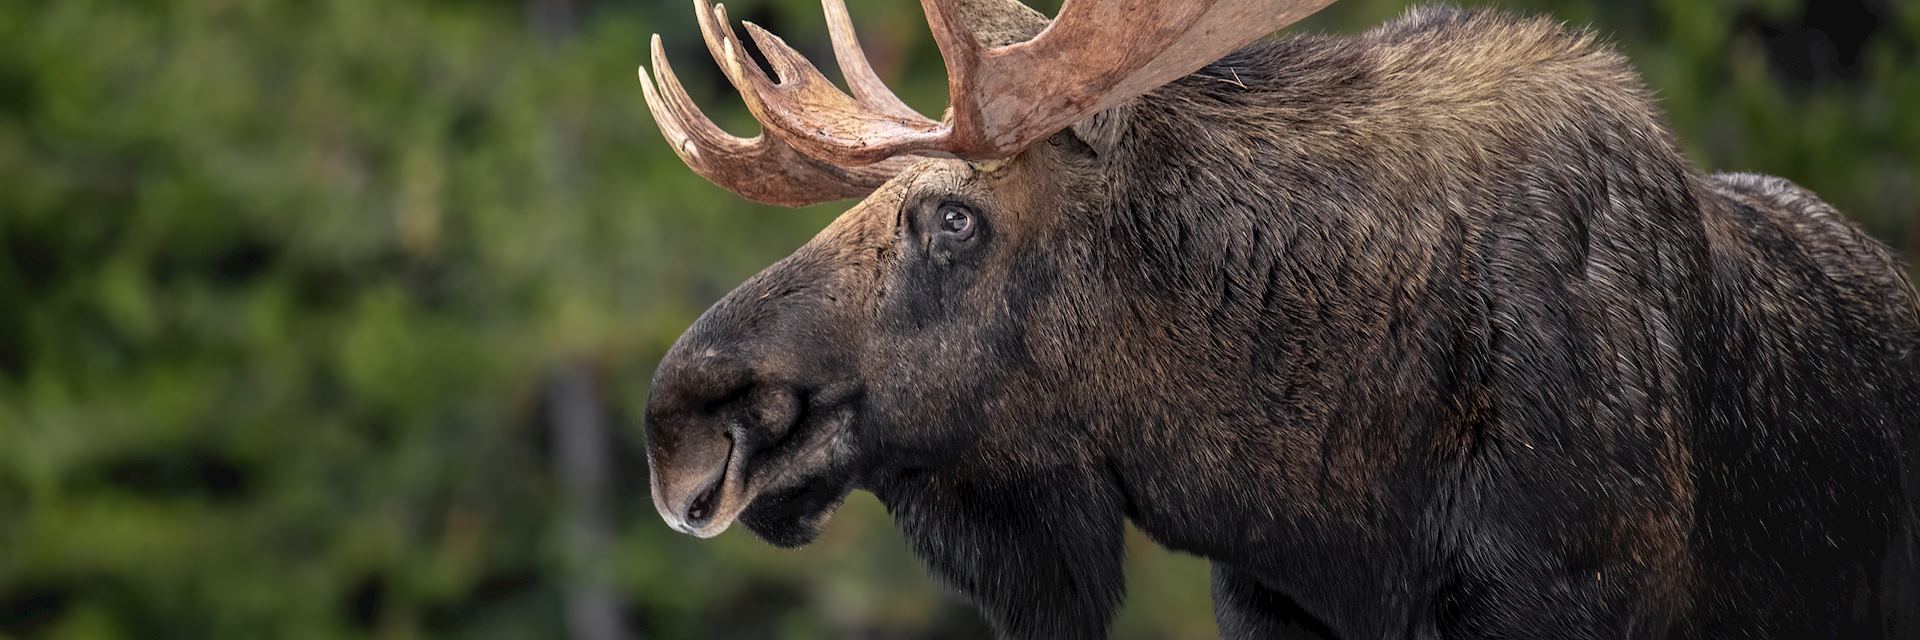 Moose in Wood Buffalo National Park, Alberta